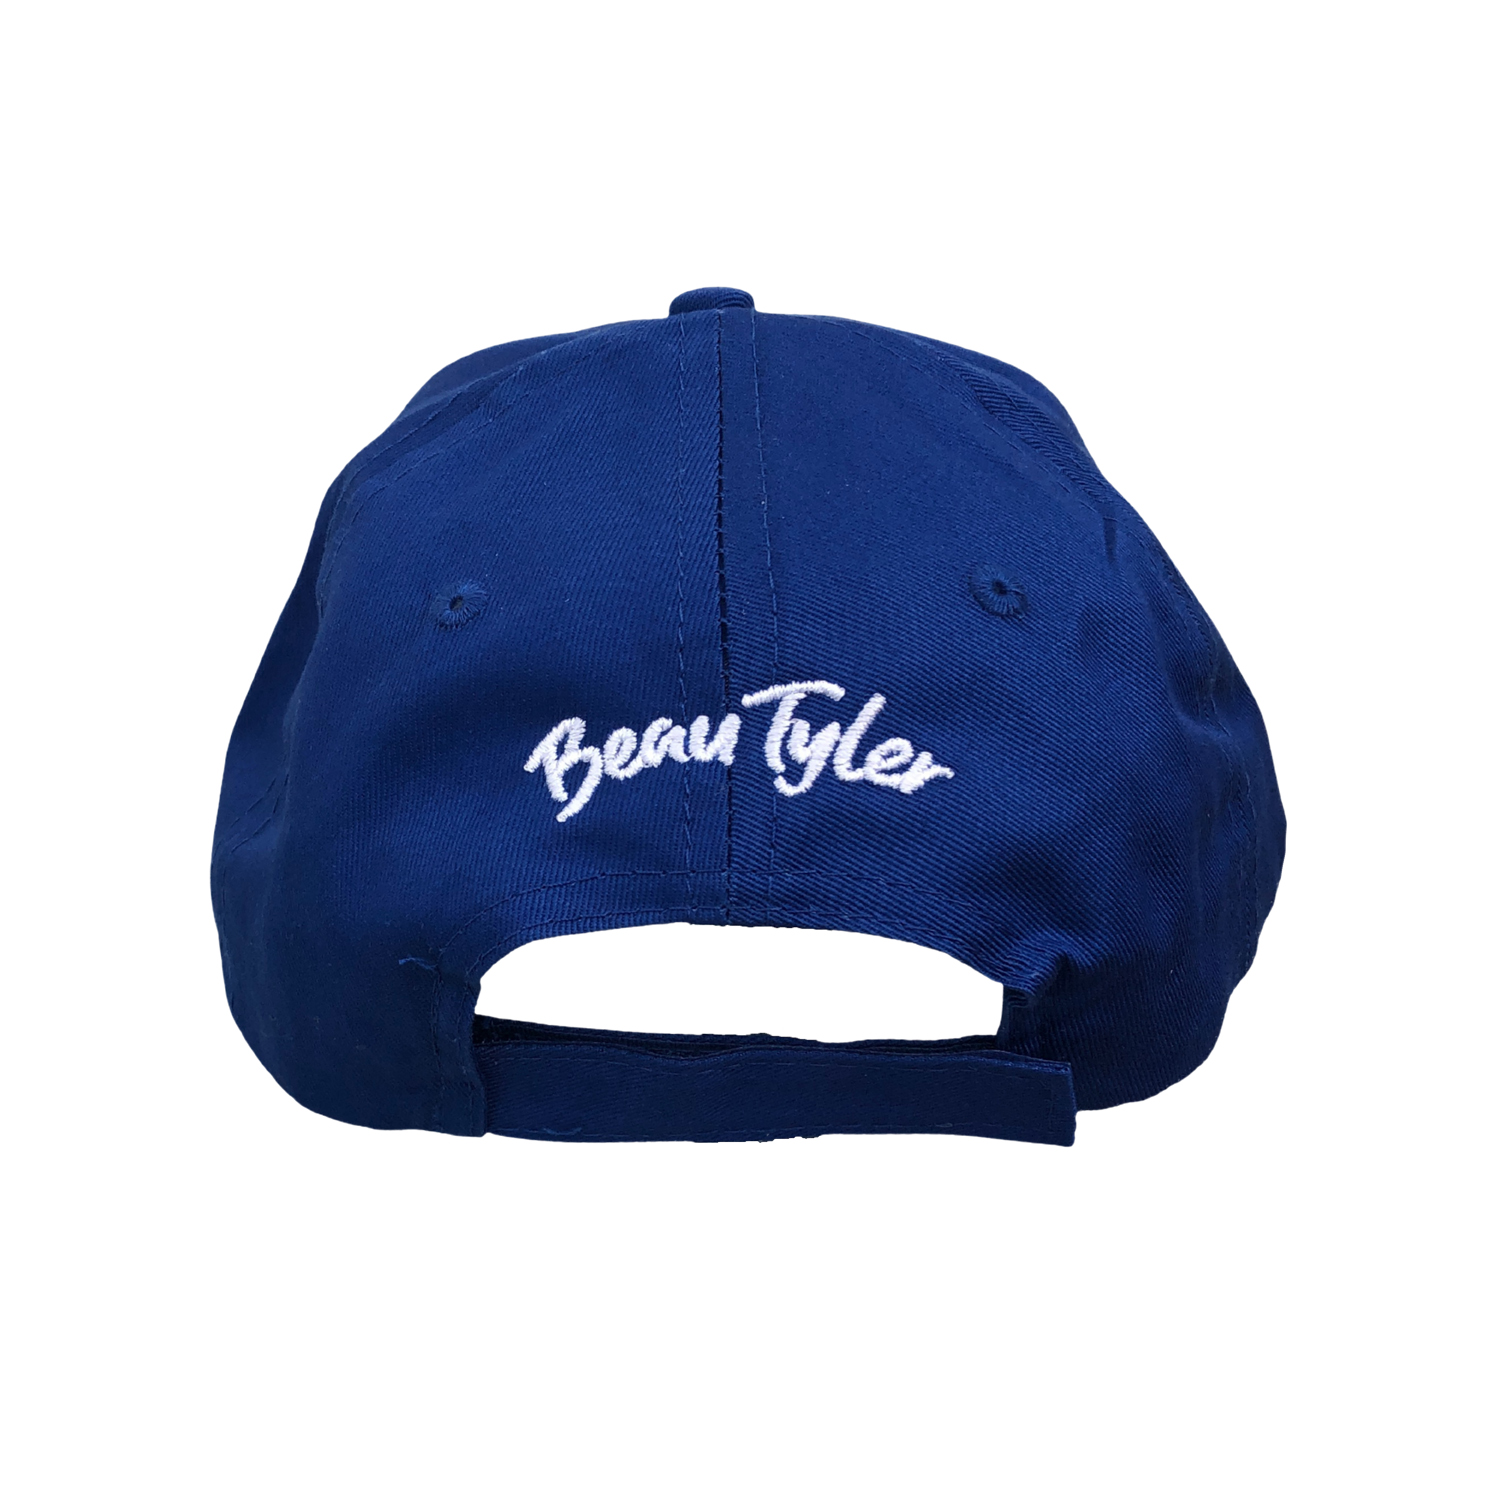 Beau Tyler - Austin hat royal blue back